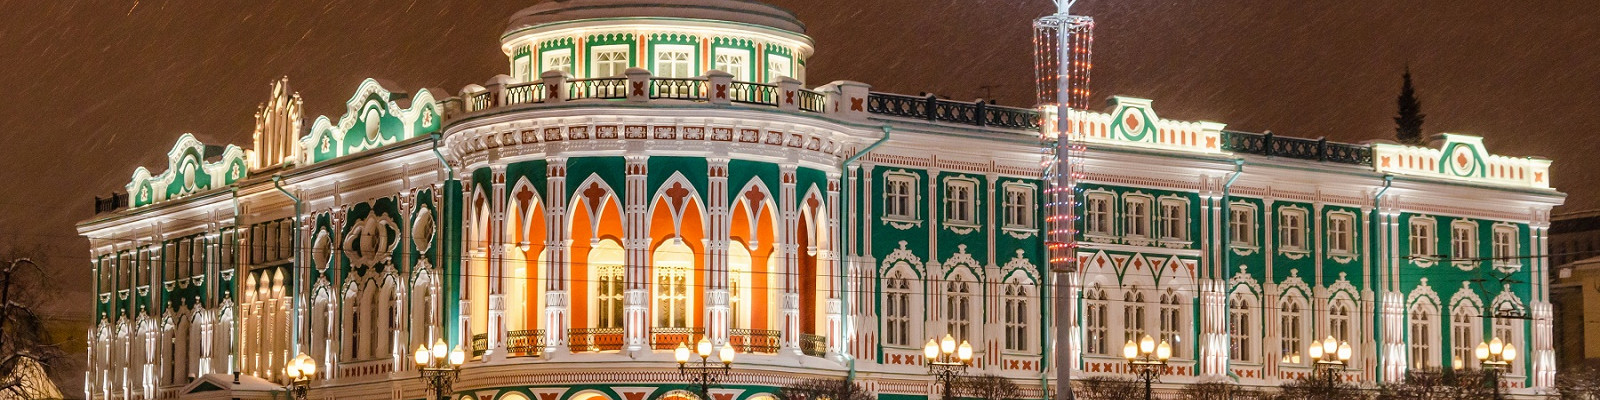 Музей истории Екатеринбурга | ВКонтакте